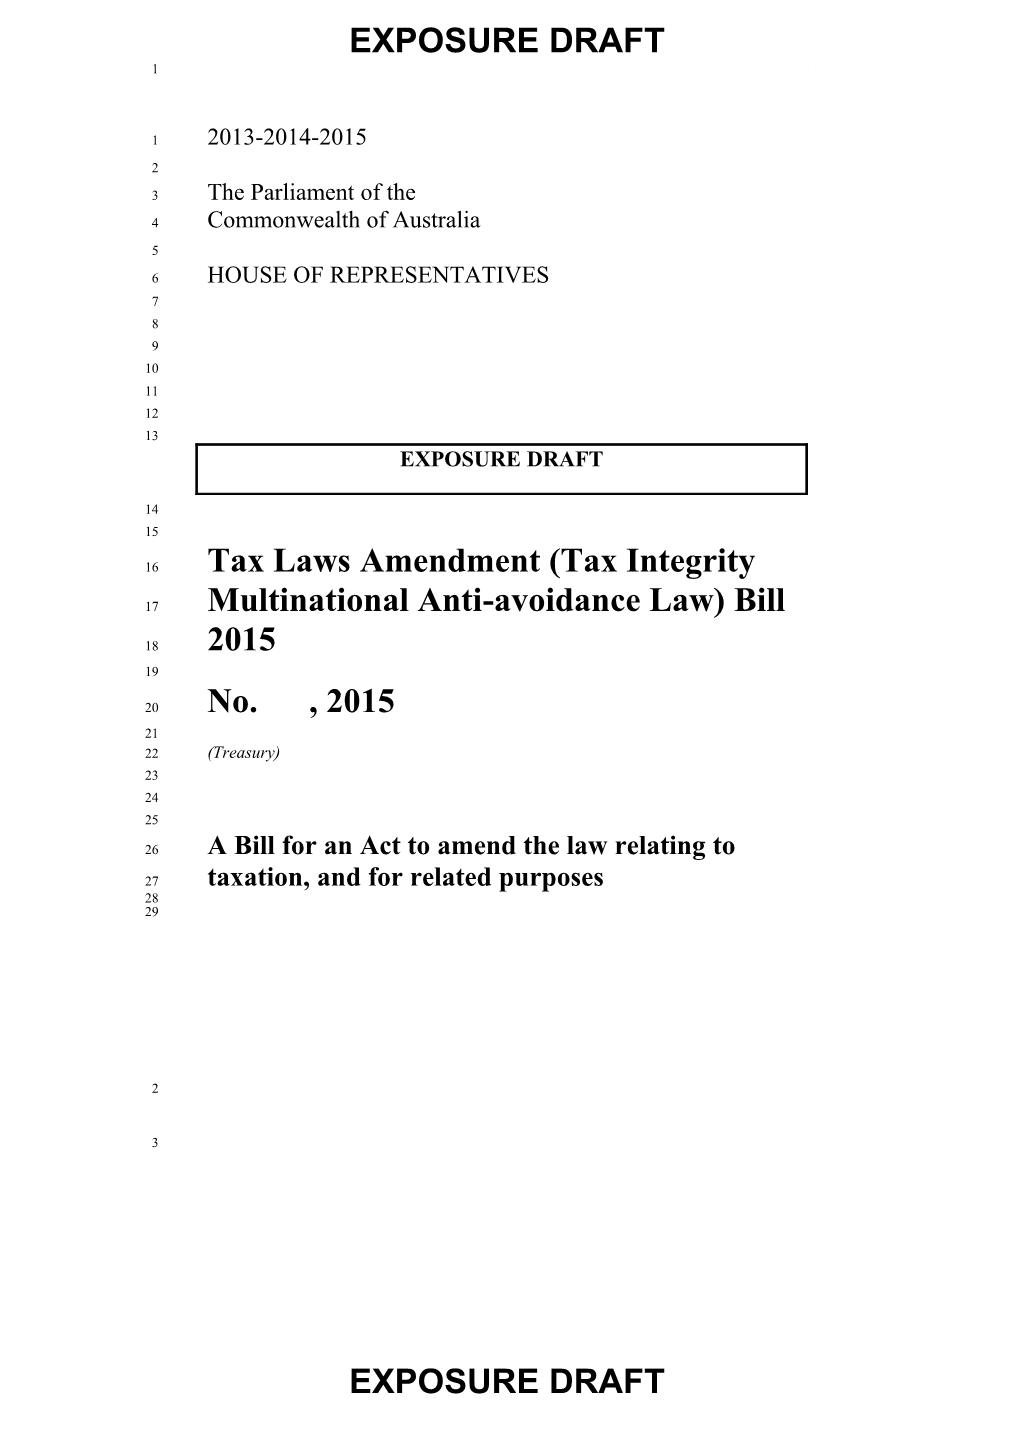 Exposure Draft - Tax Integrity Multinational Anti-Avoidance Law